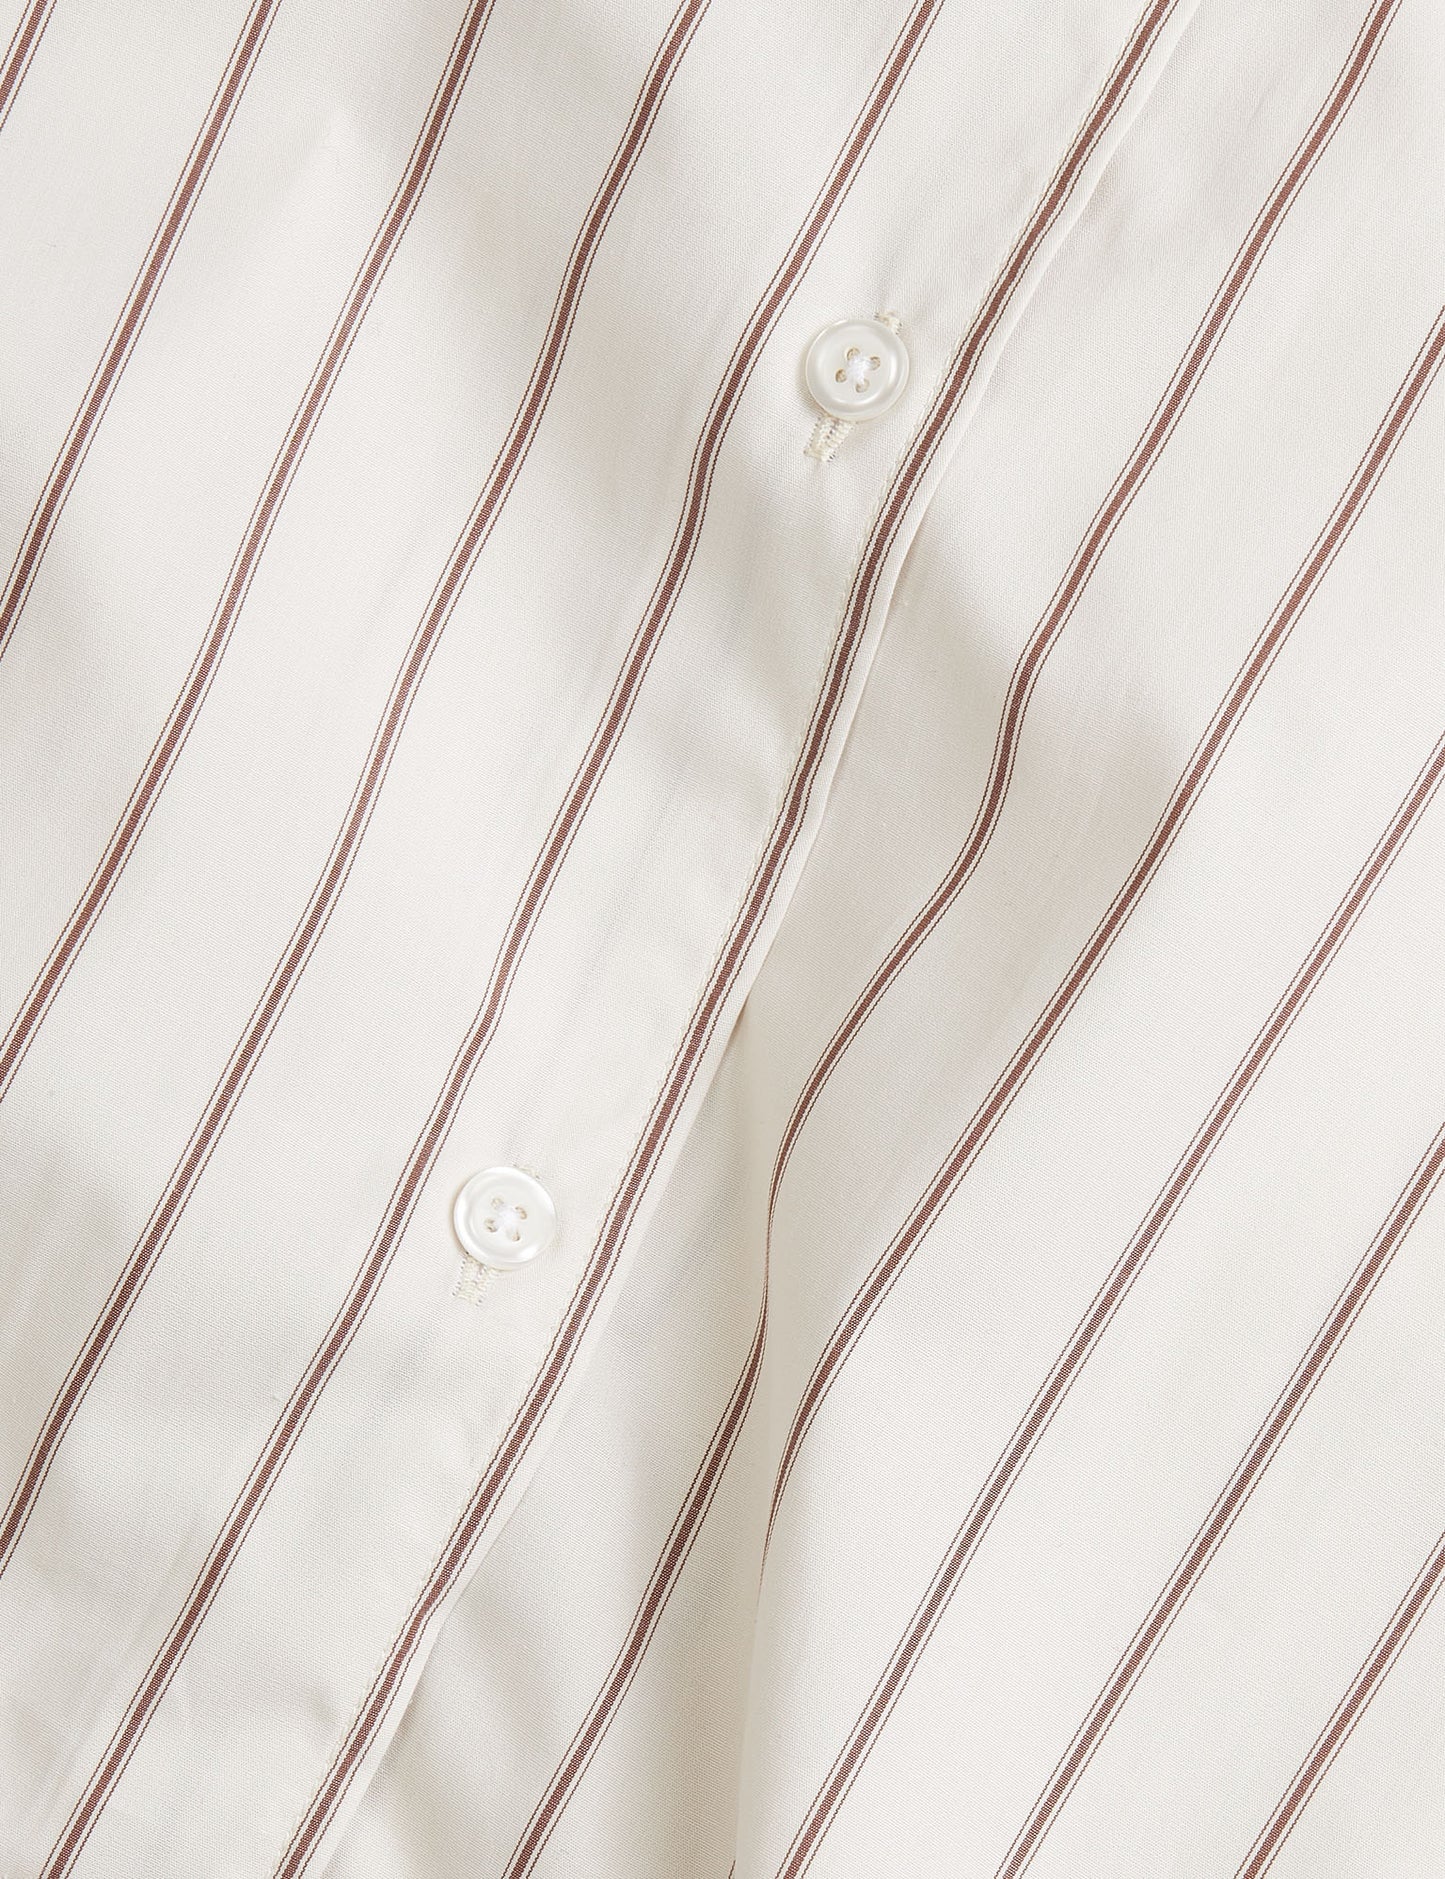 Yarpo Crissy Dress, YD Stripe/Silver Birch